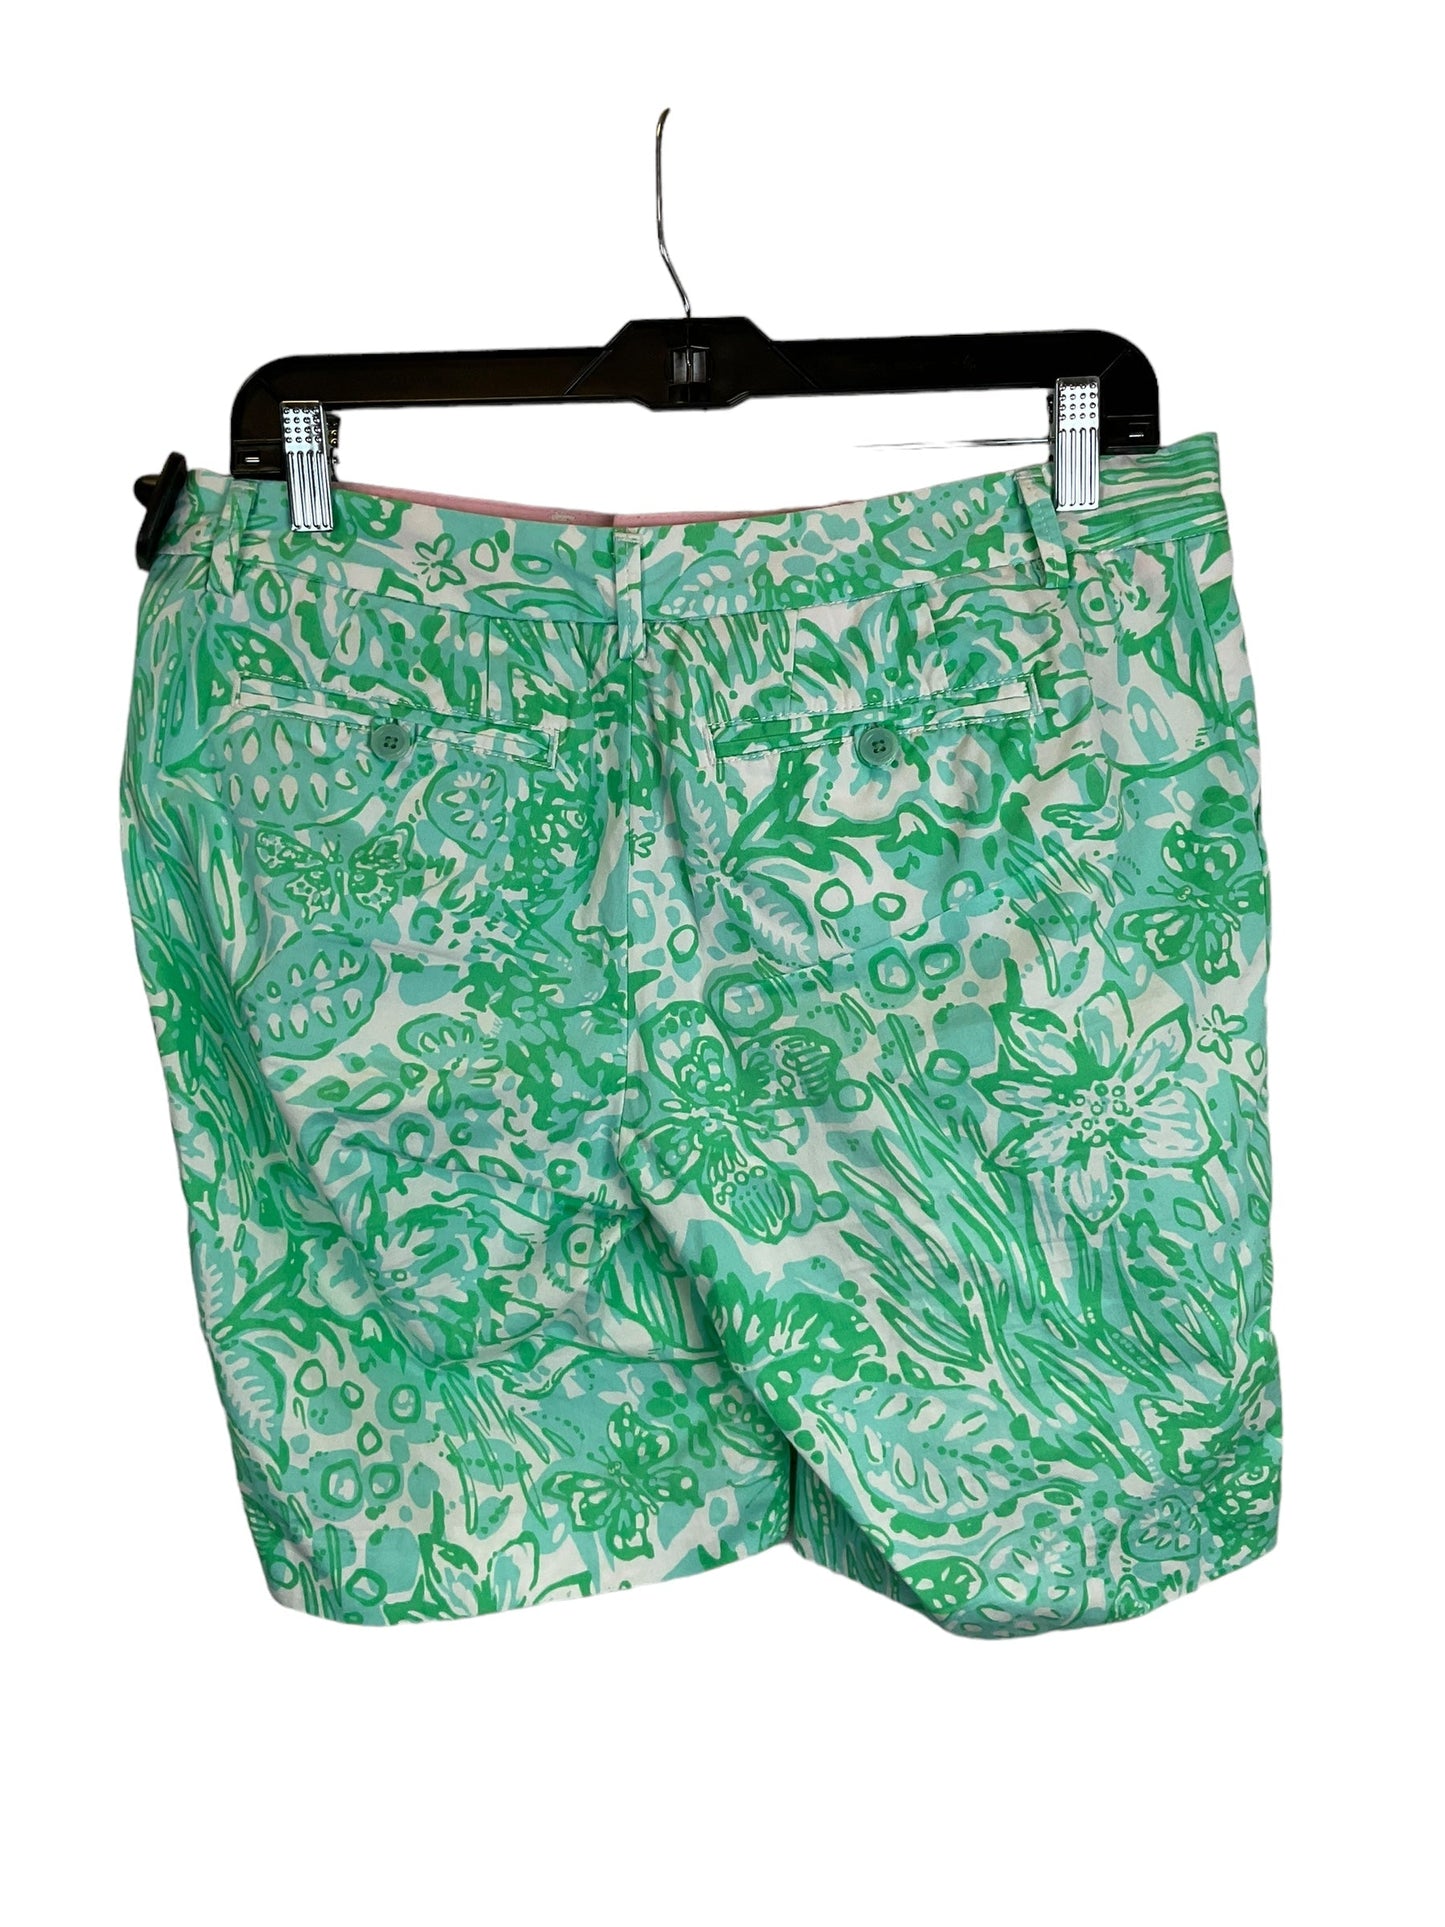 Green Shorts Designer Lilly Pulitzer, Size 4